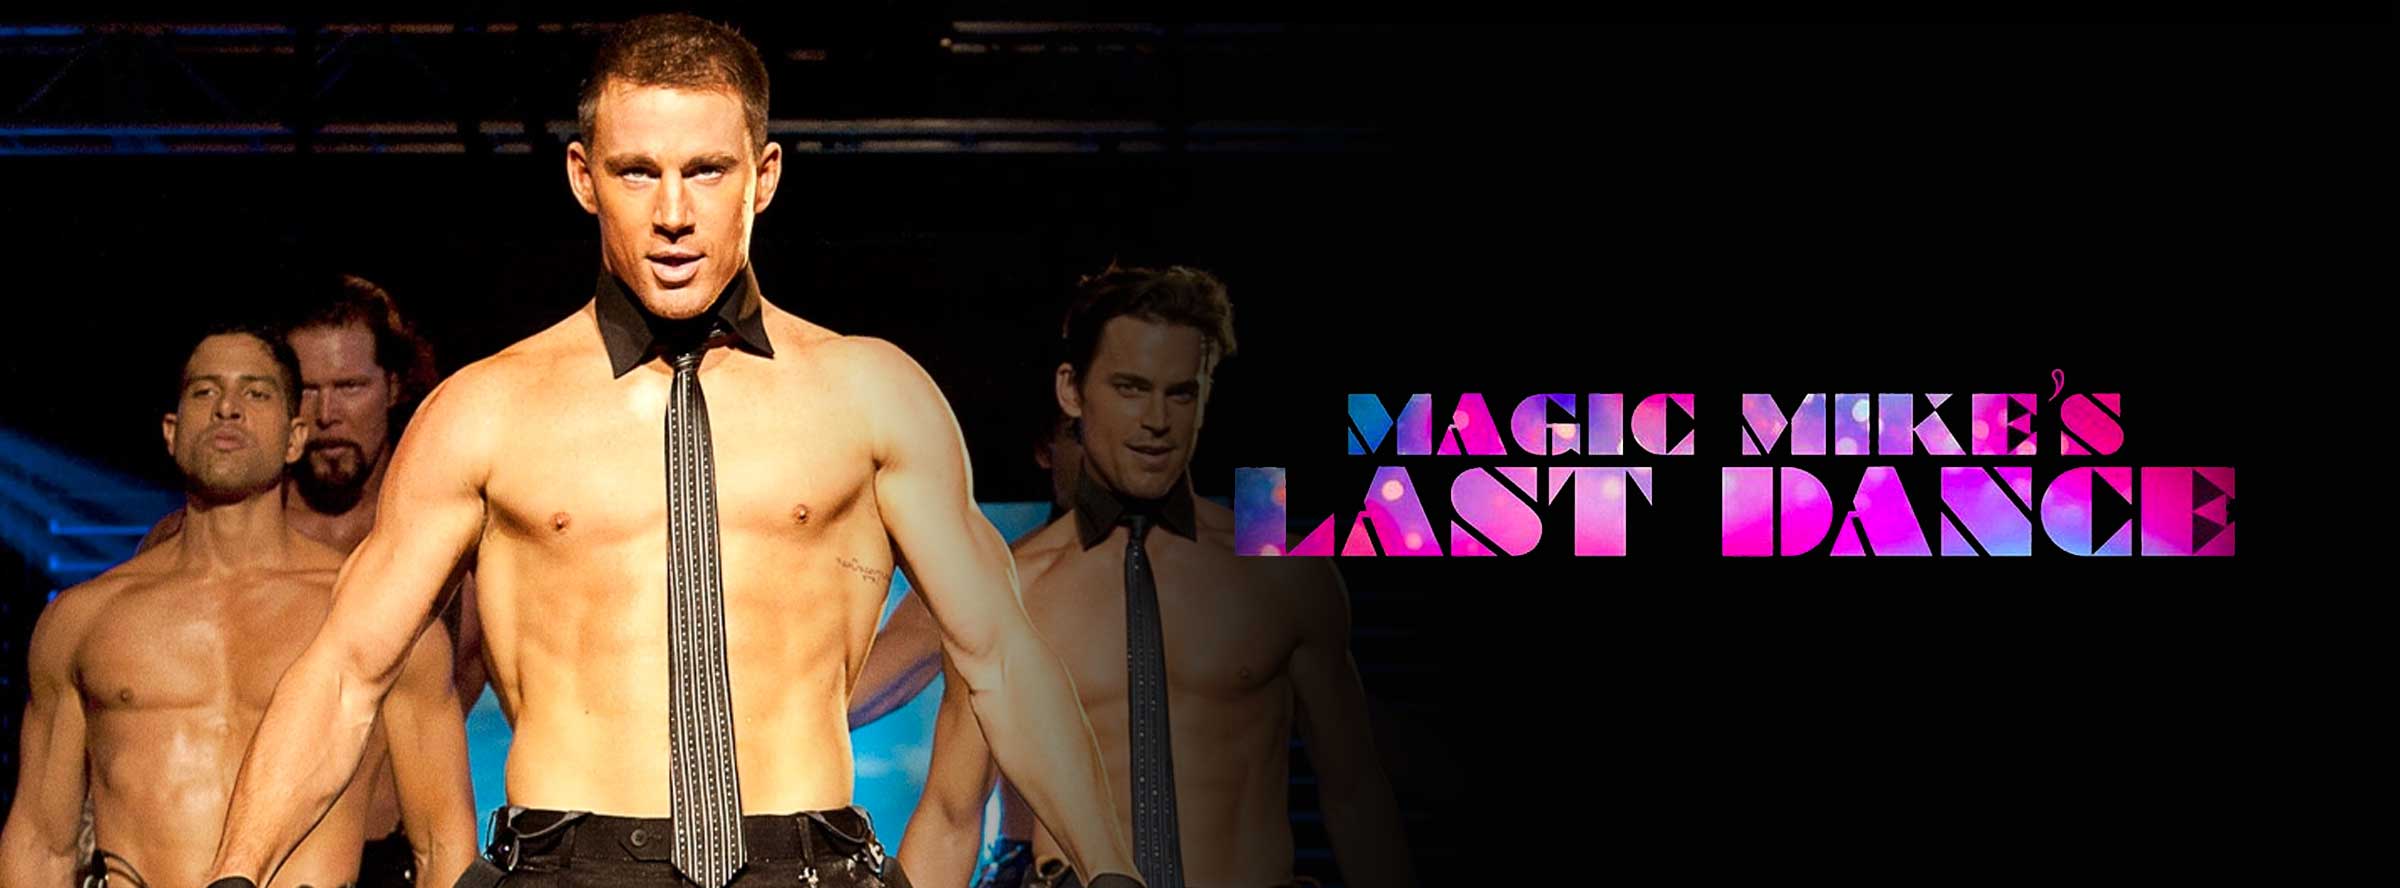 Slider Image for Magic Mike's Last Dance